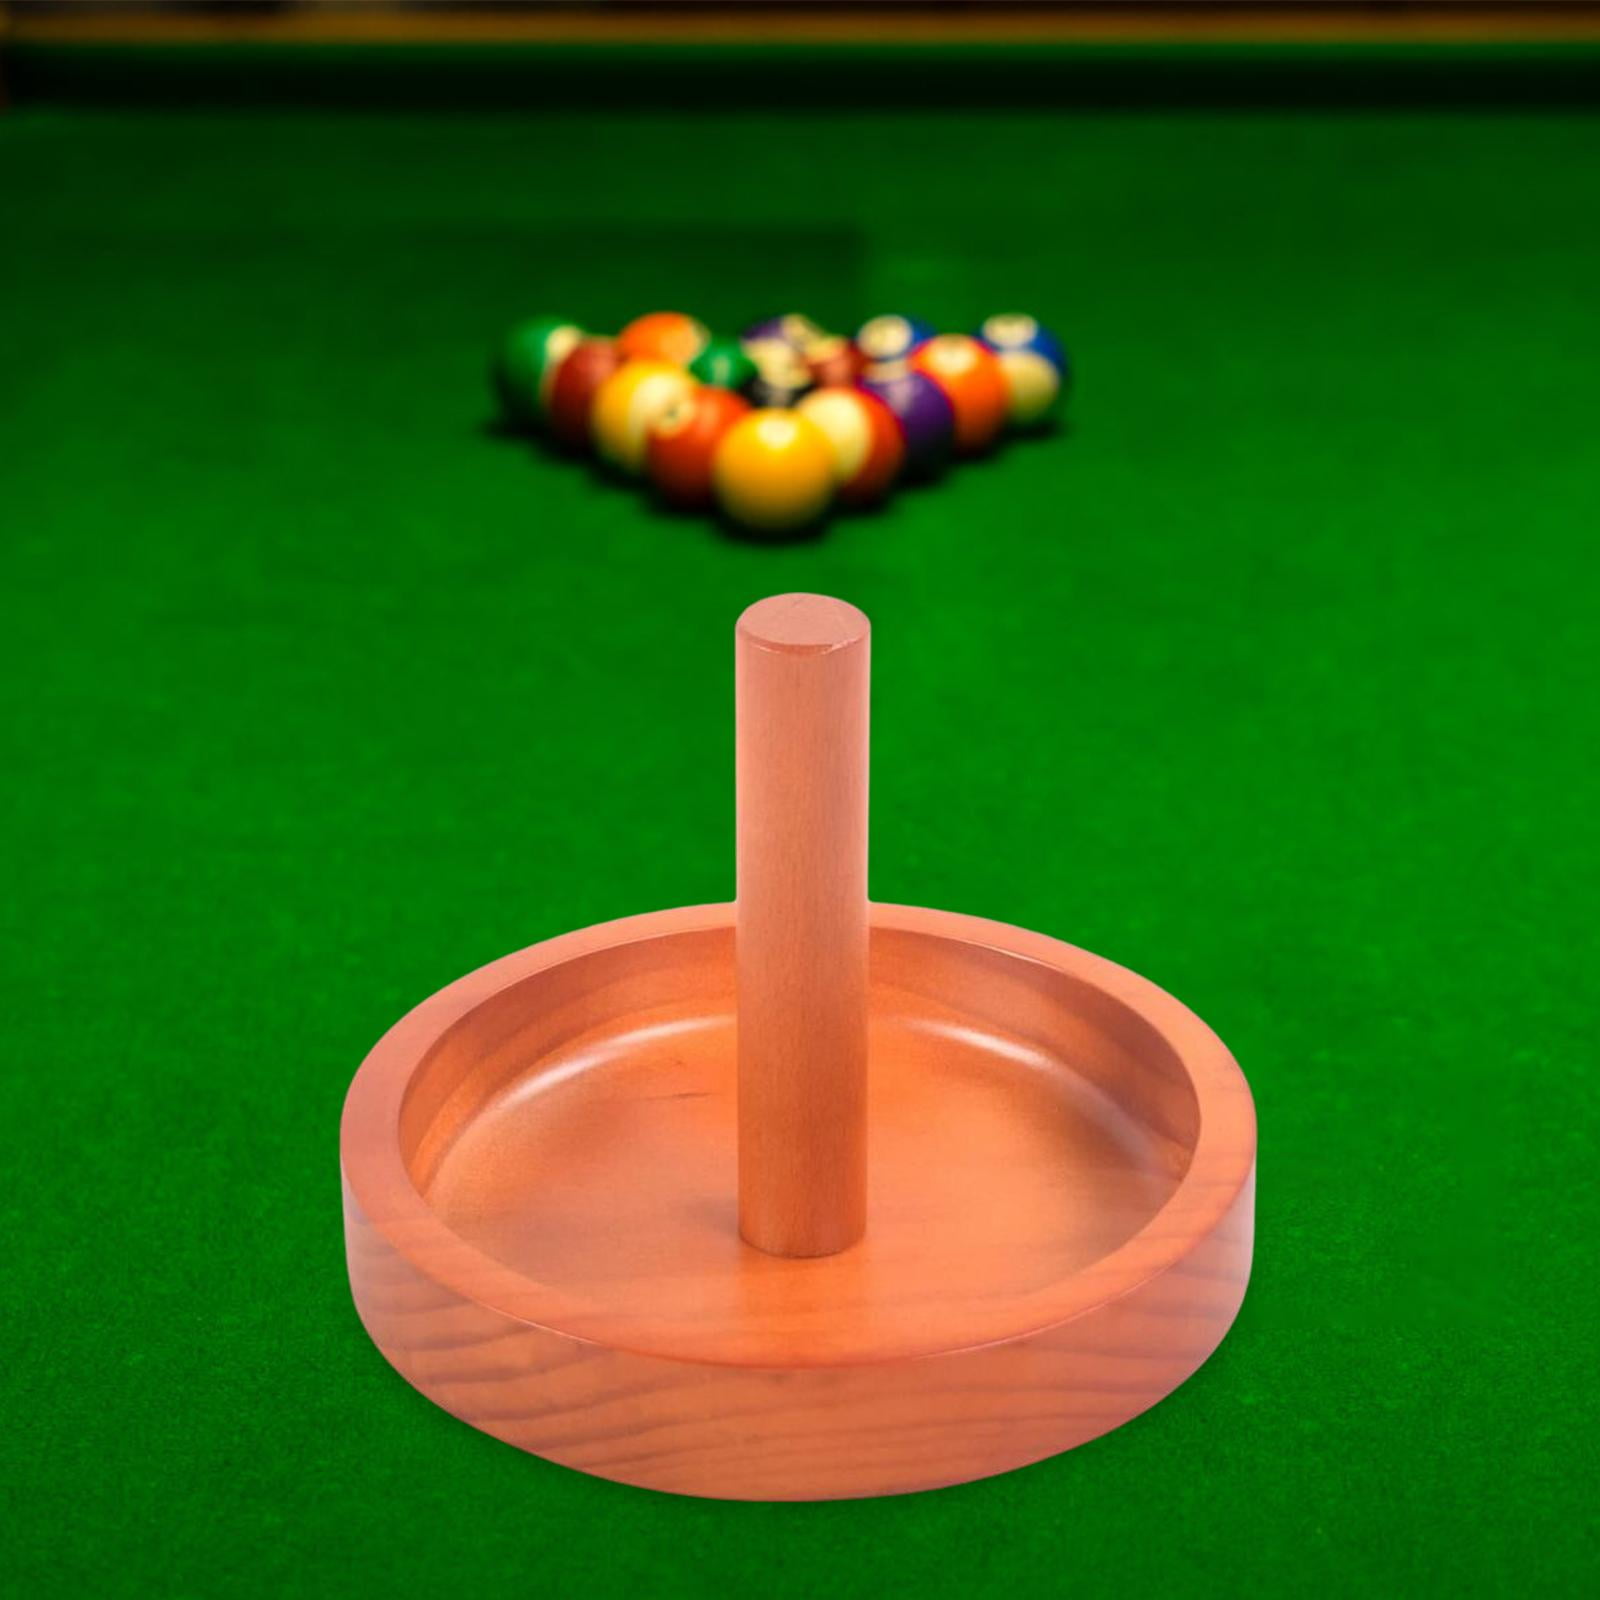 KONLLEN 4 in 1 Chalk Holder for Billiards Portable Pool Snooker